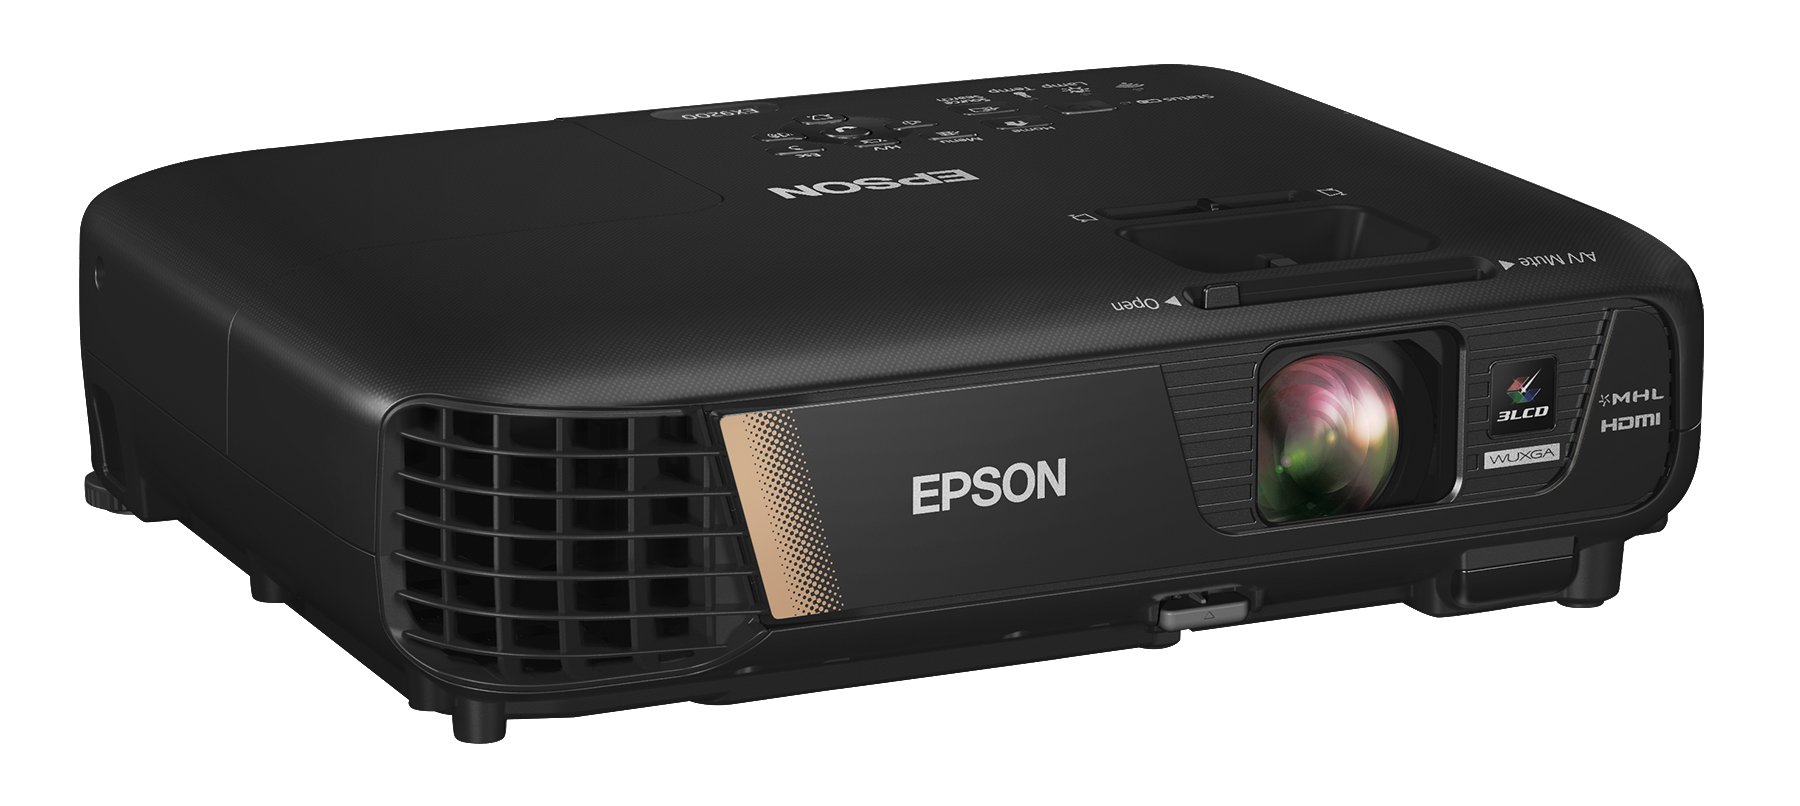 Epson EX9200 Pro Wireless WUXGA 3LCD Projector